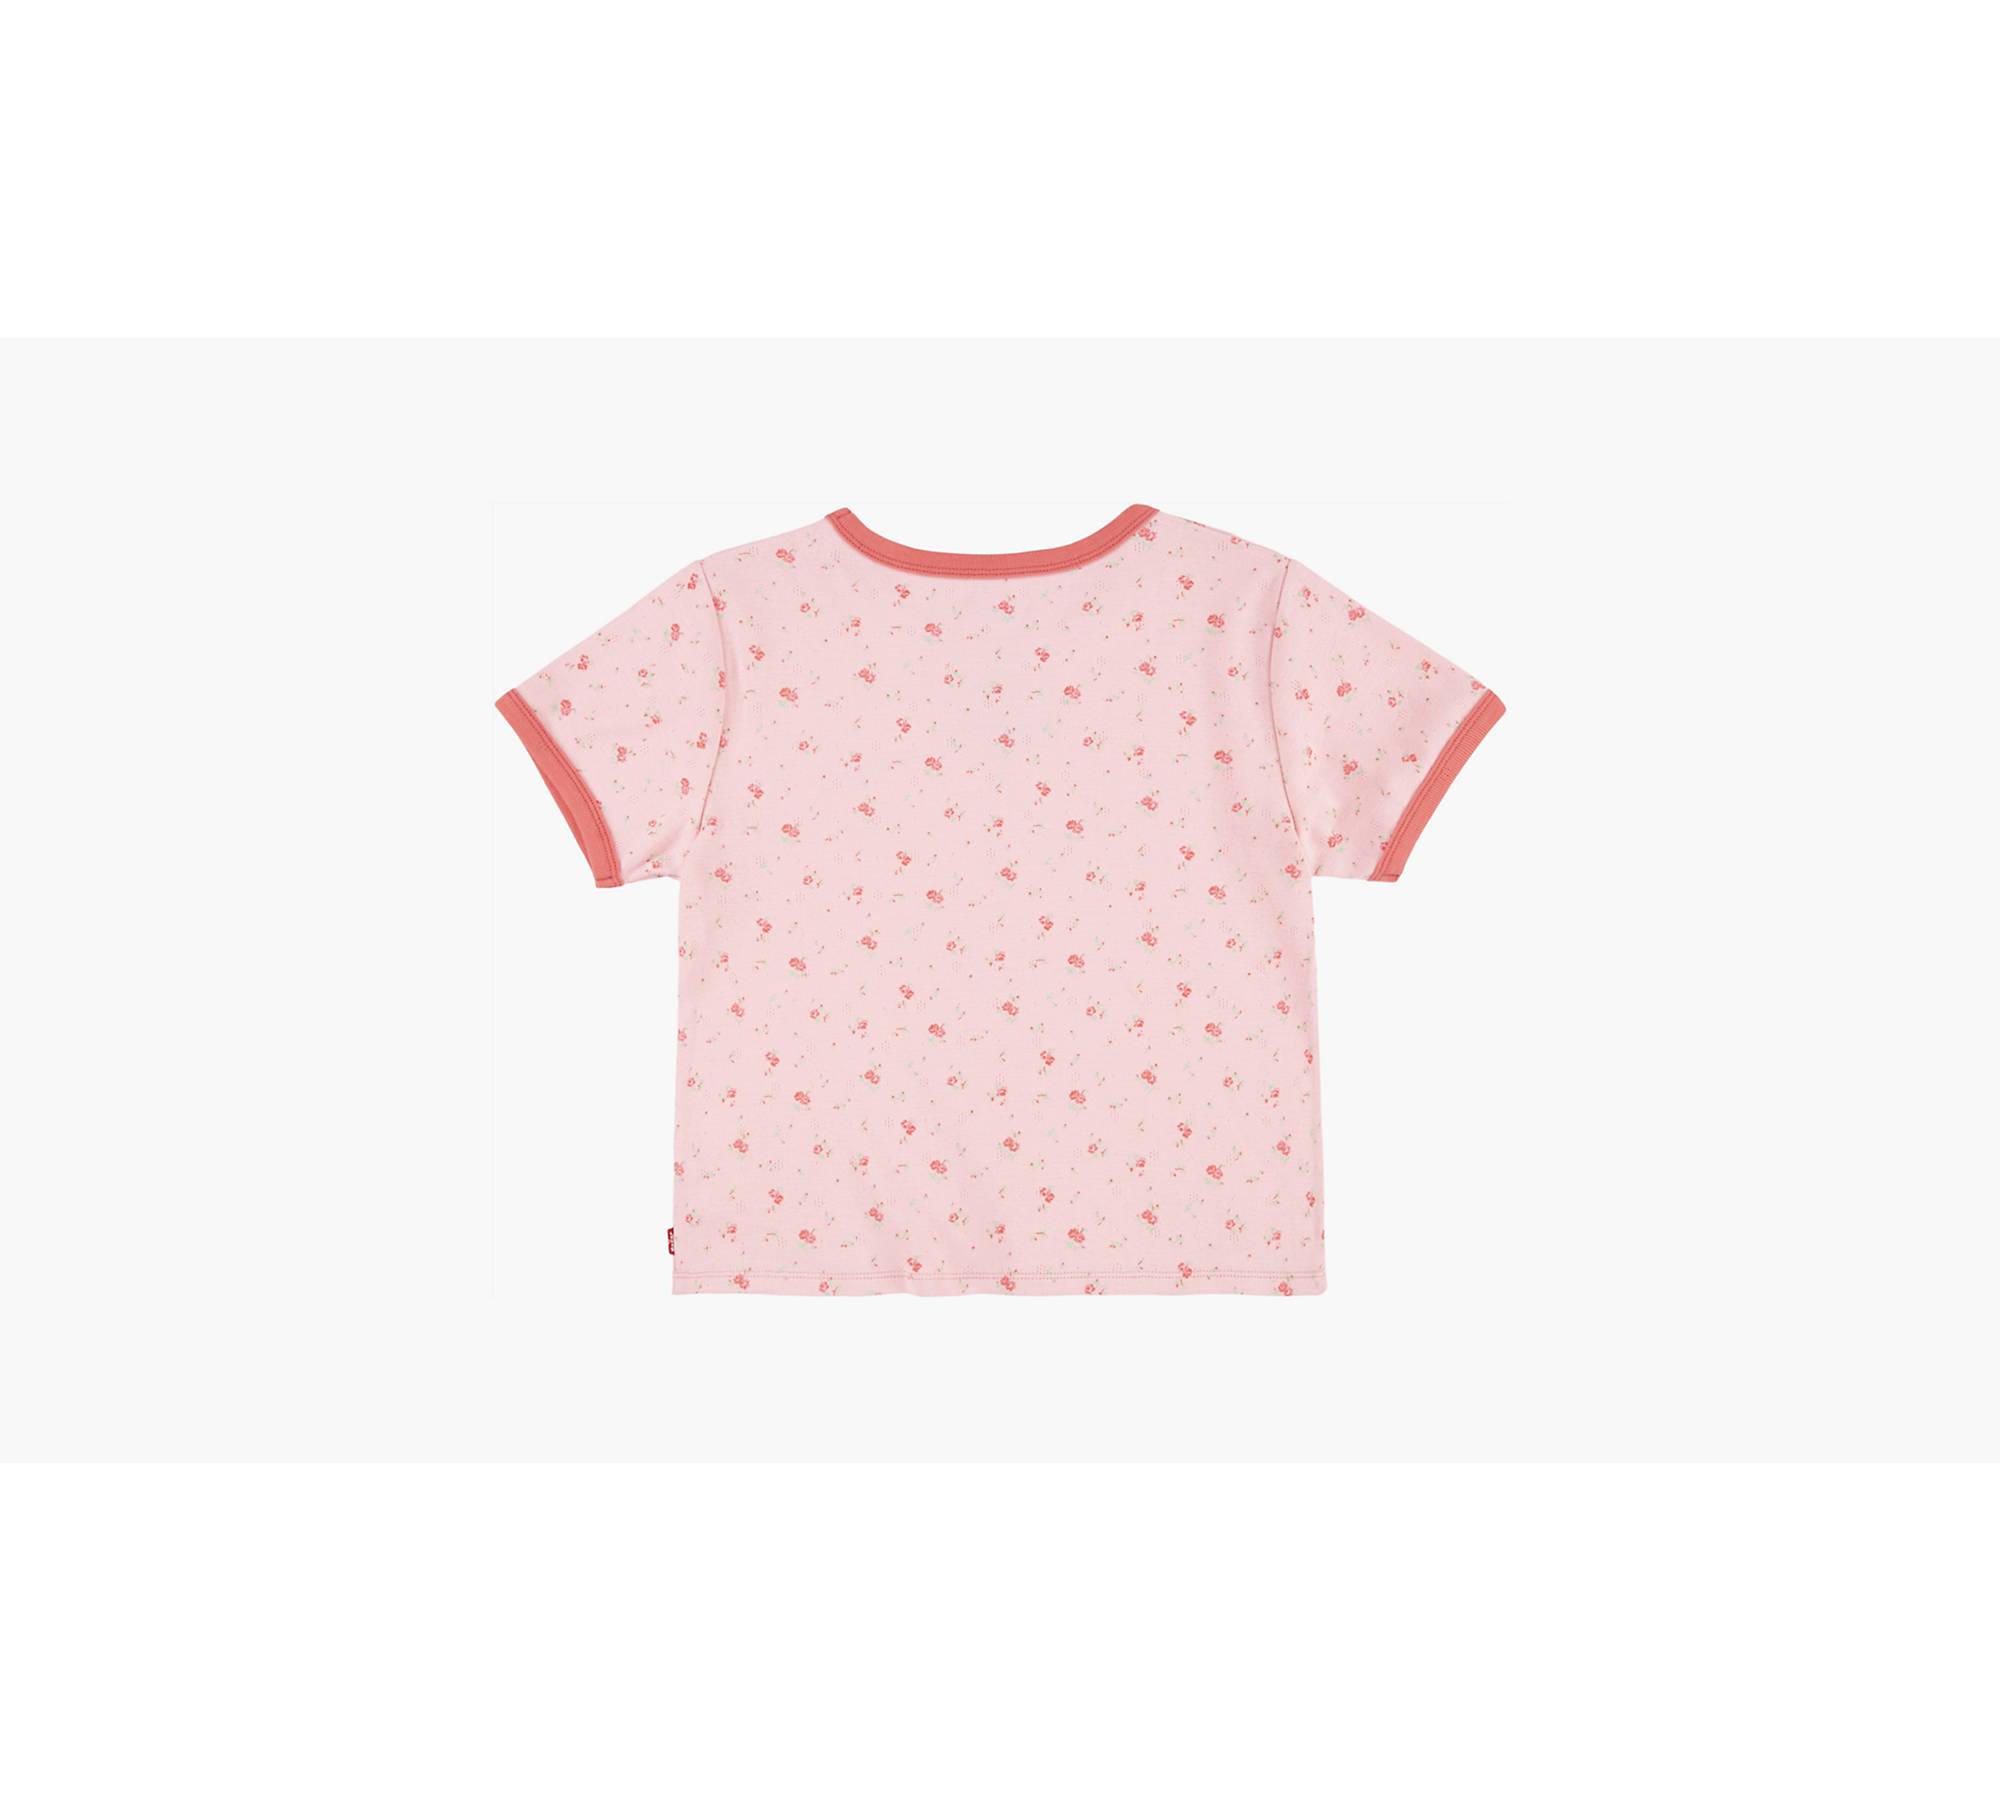 J Jill Pink Mauve Floral Embroidered Tee Shirt Women's Size Petite XL -  beyond exchange